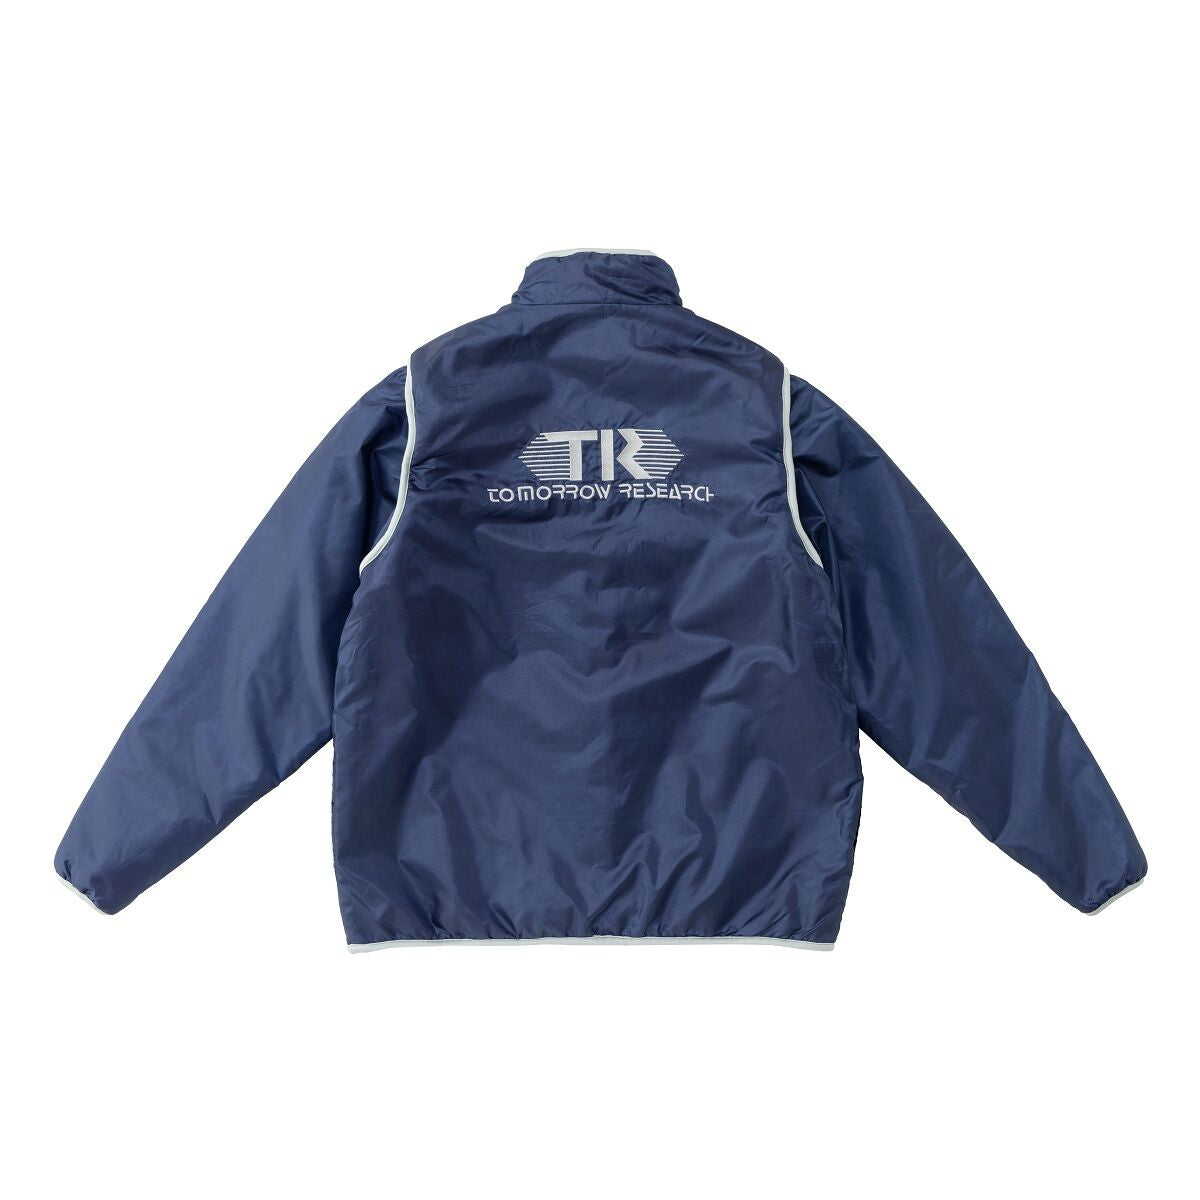 Timeranger Tomorrow Research Jacket Ver 2